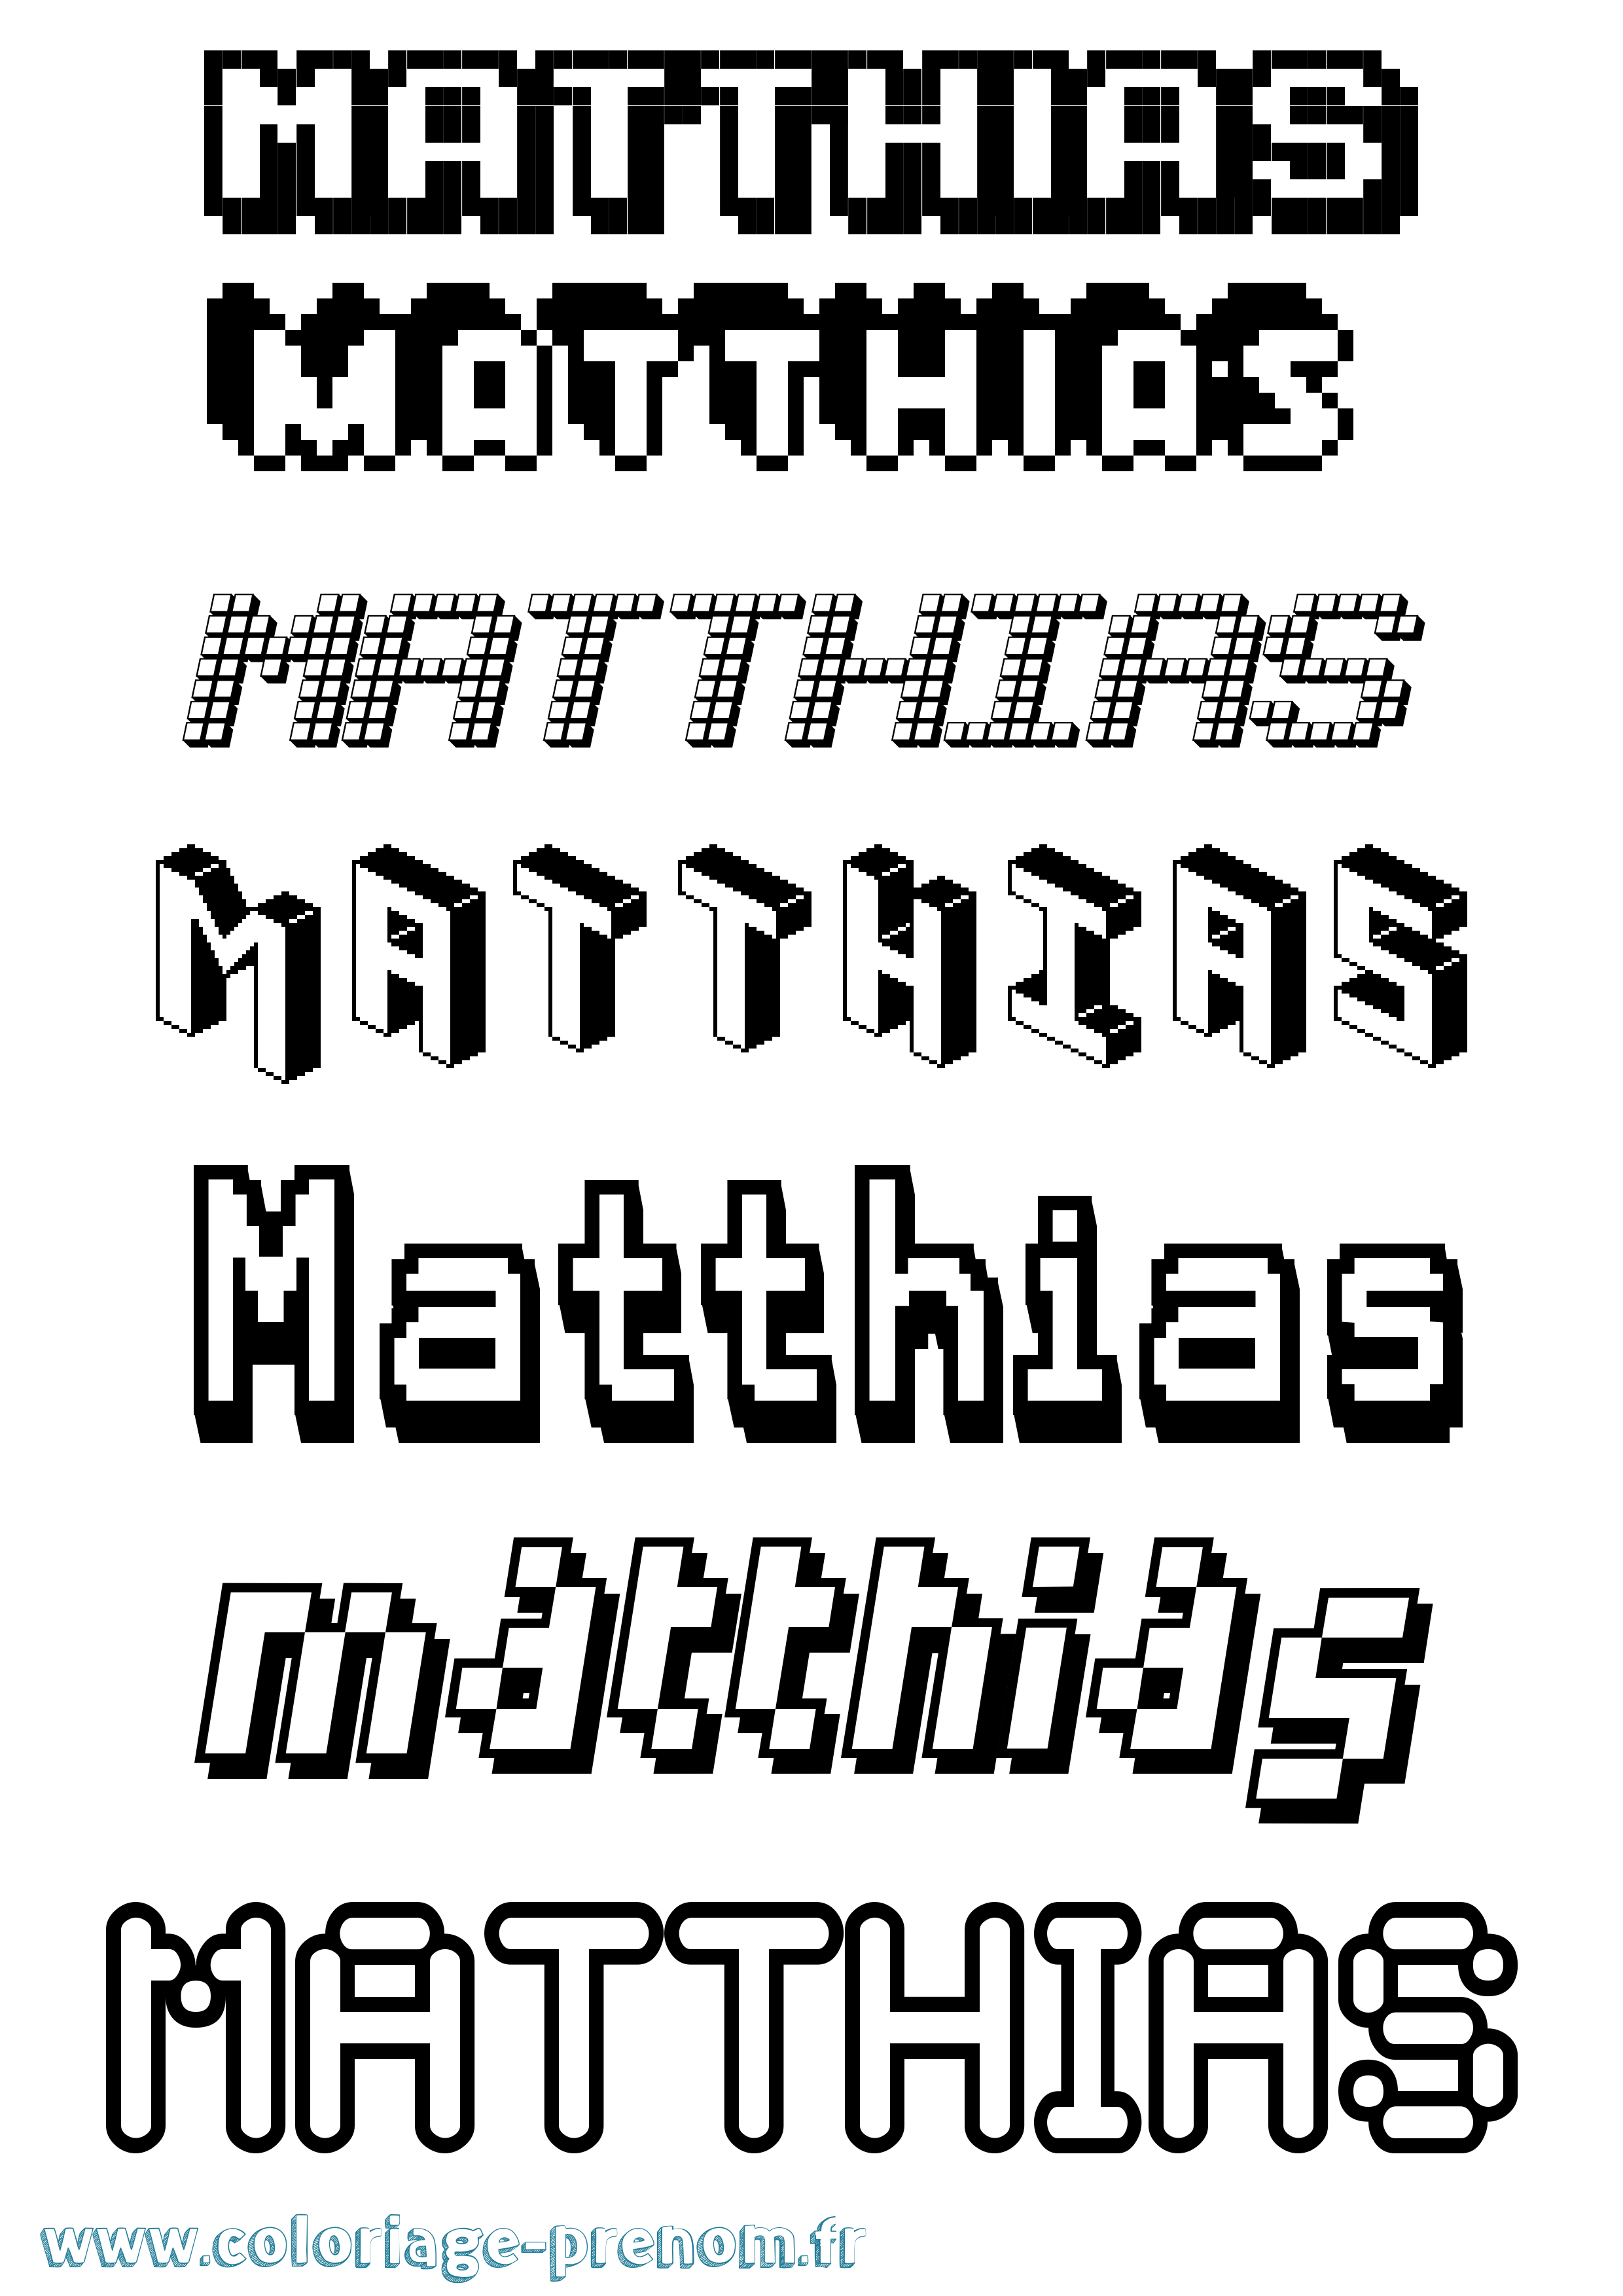 Coloriage prénom Matthias